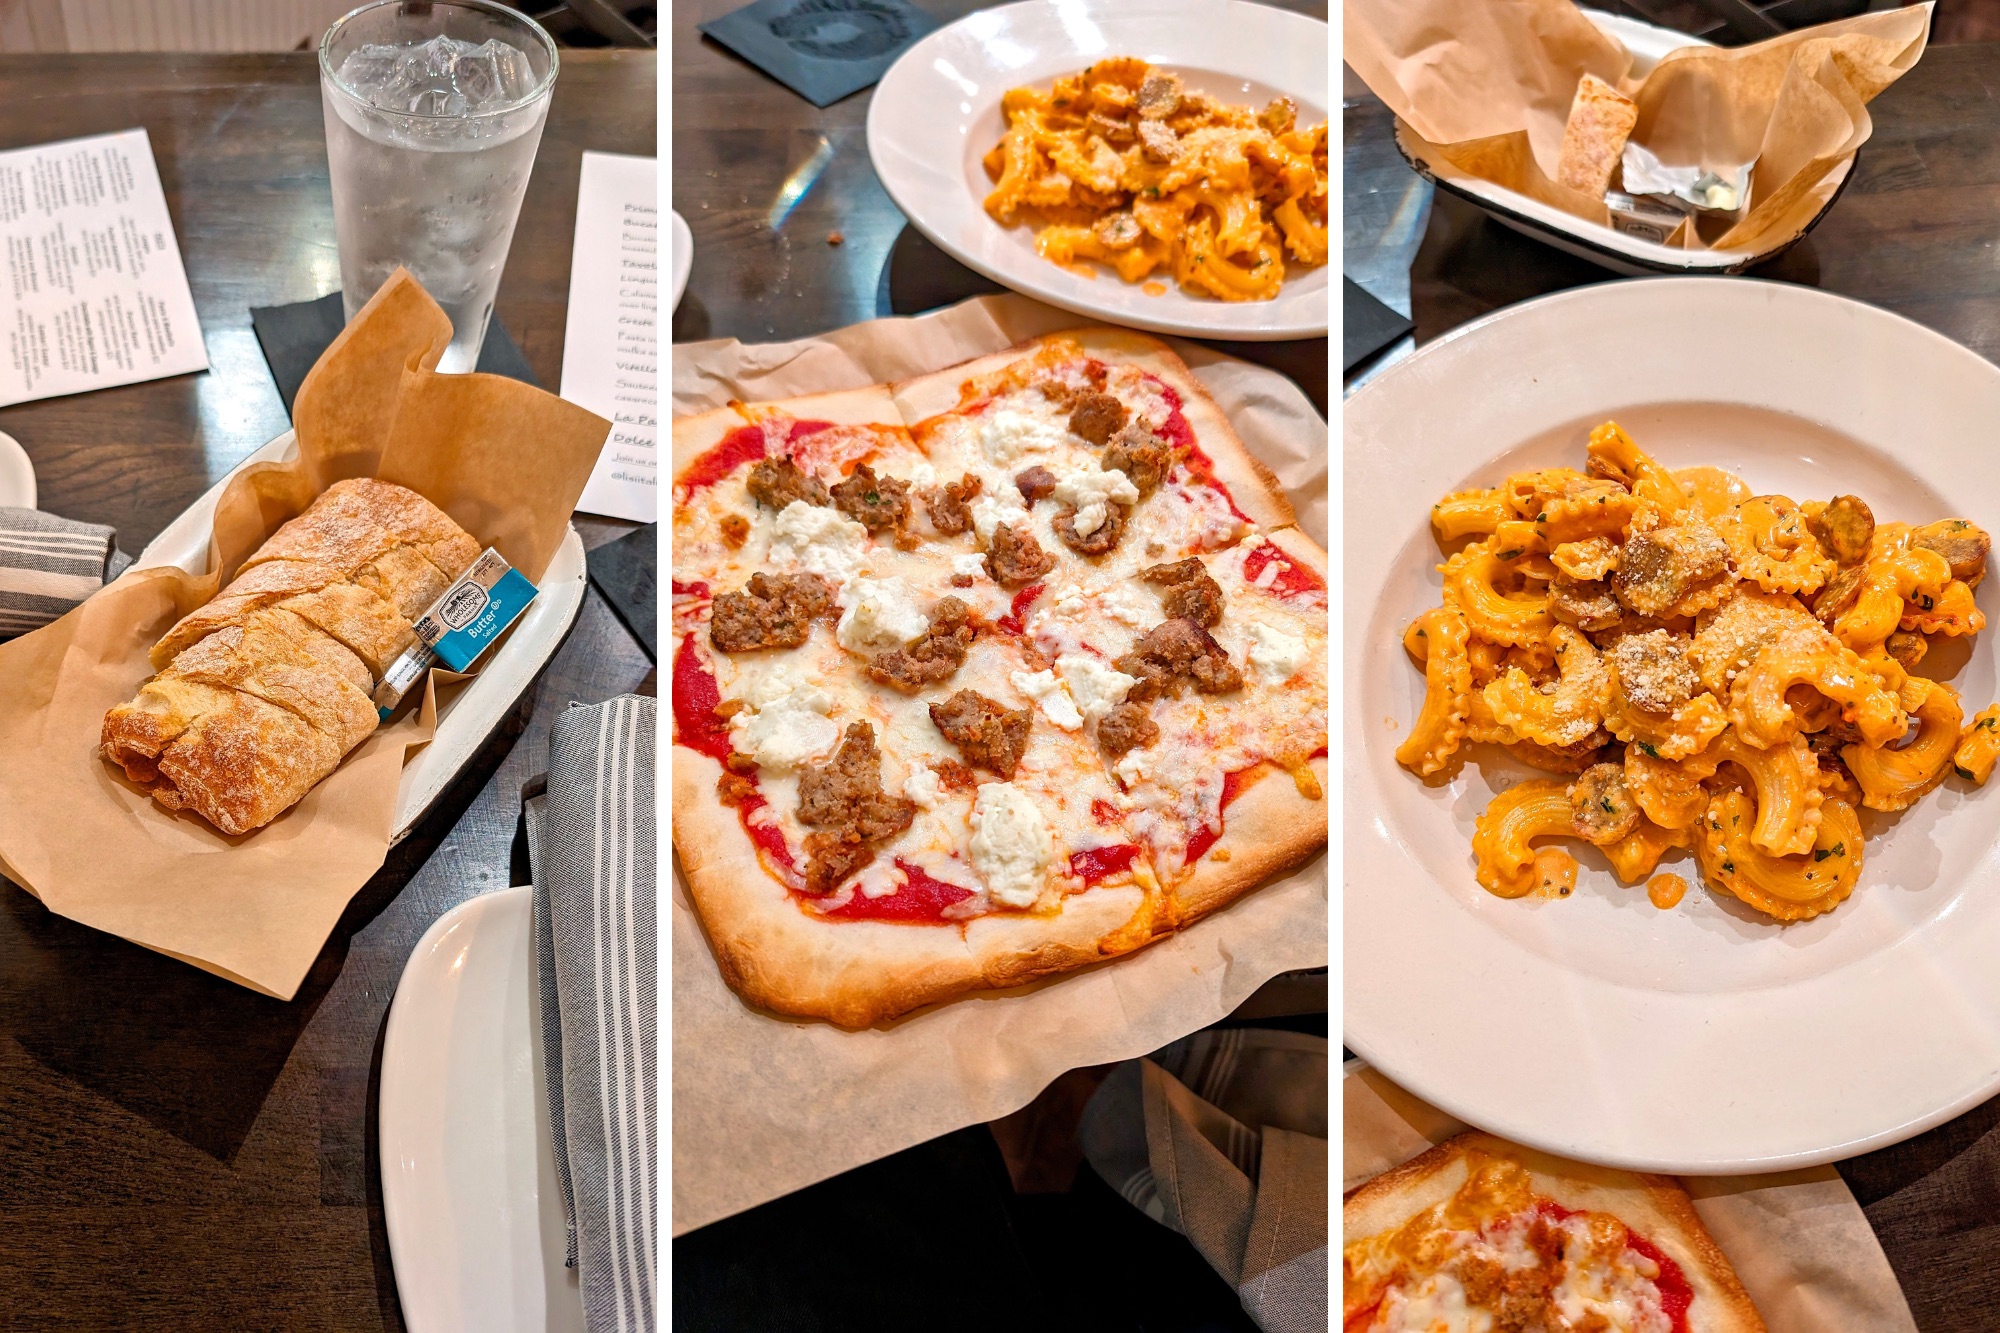 A trio of plates at Lisi Italian: fresh bread, pizza, and pasta